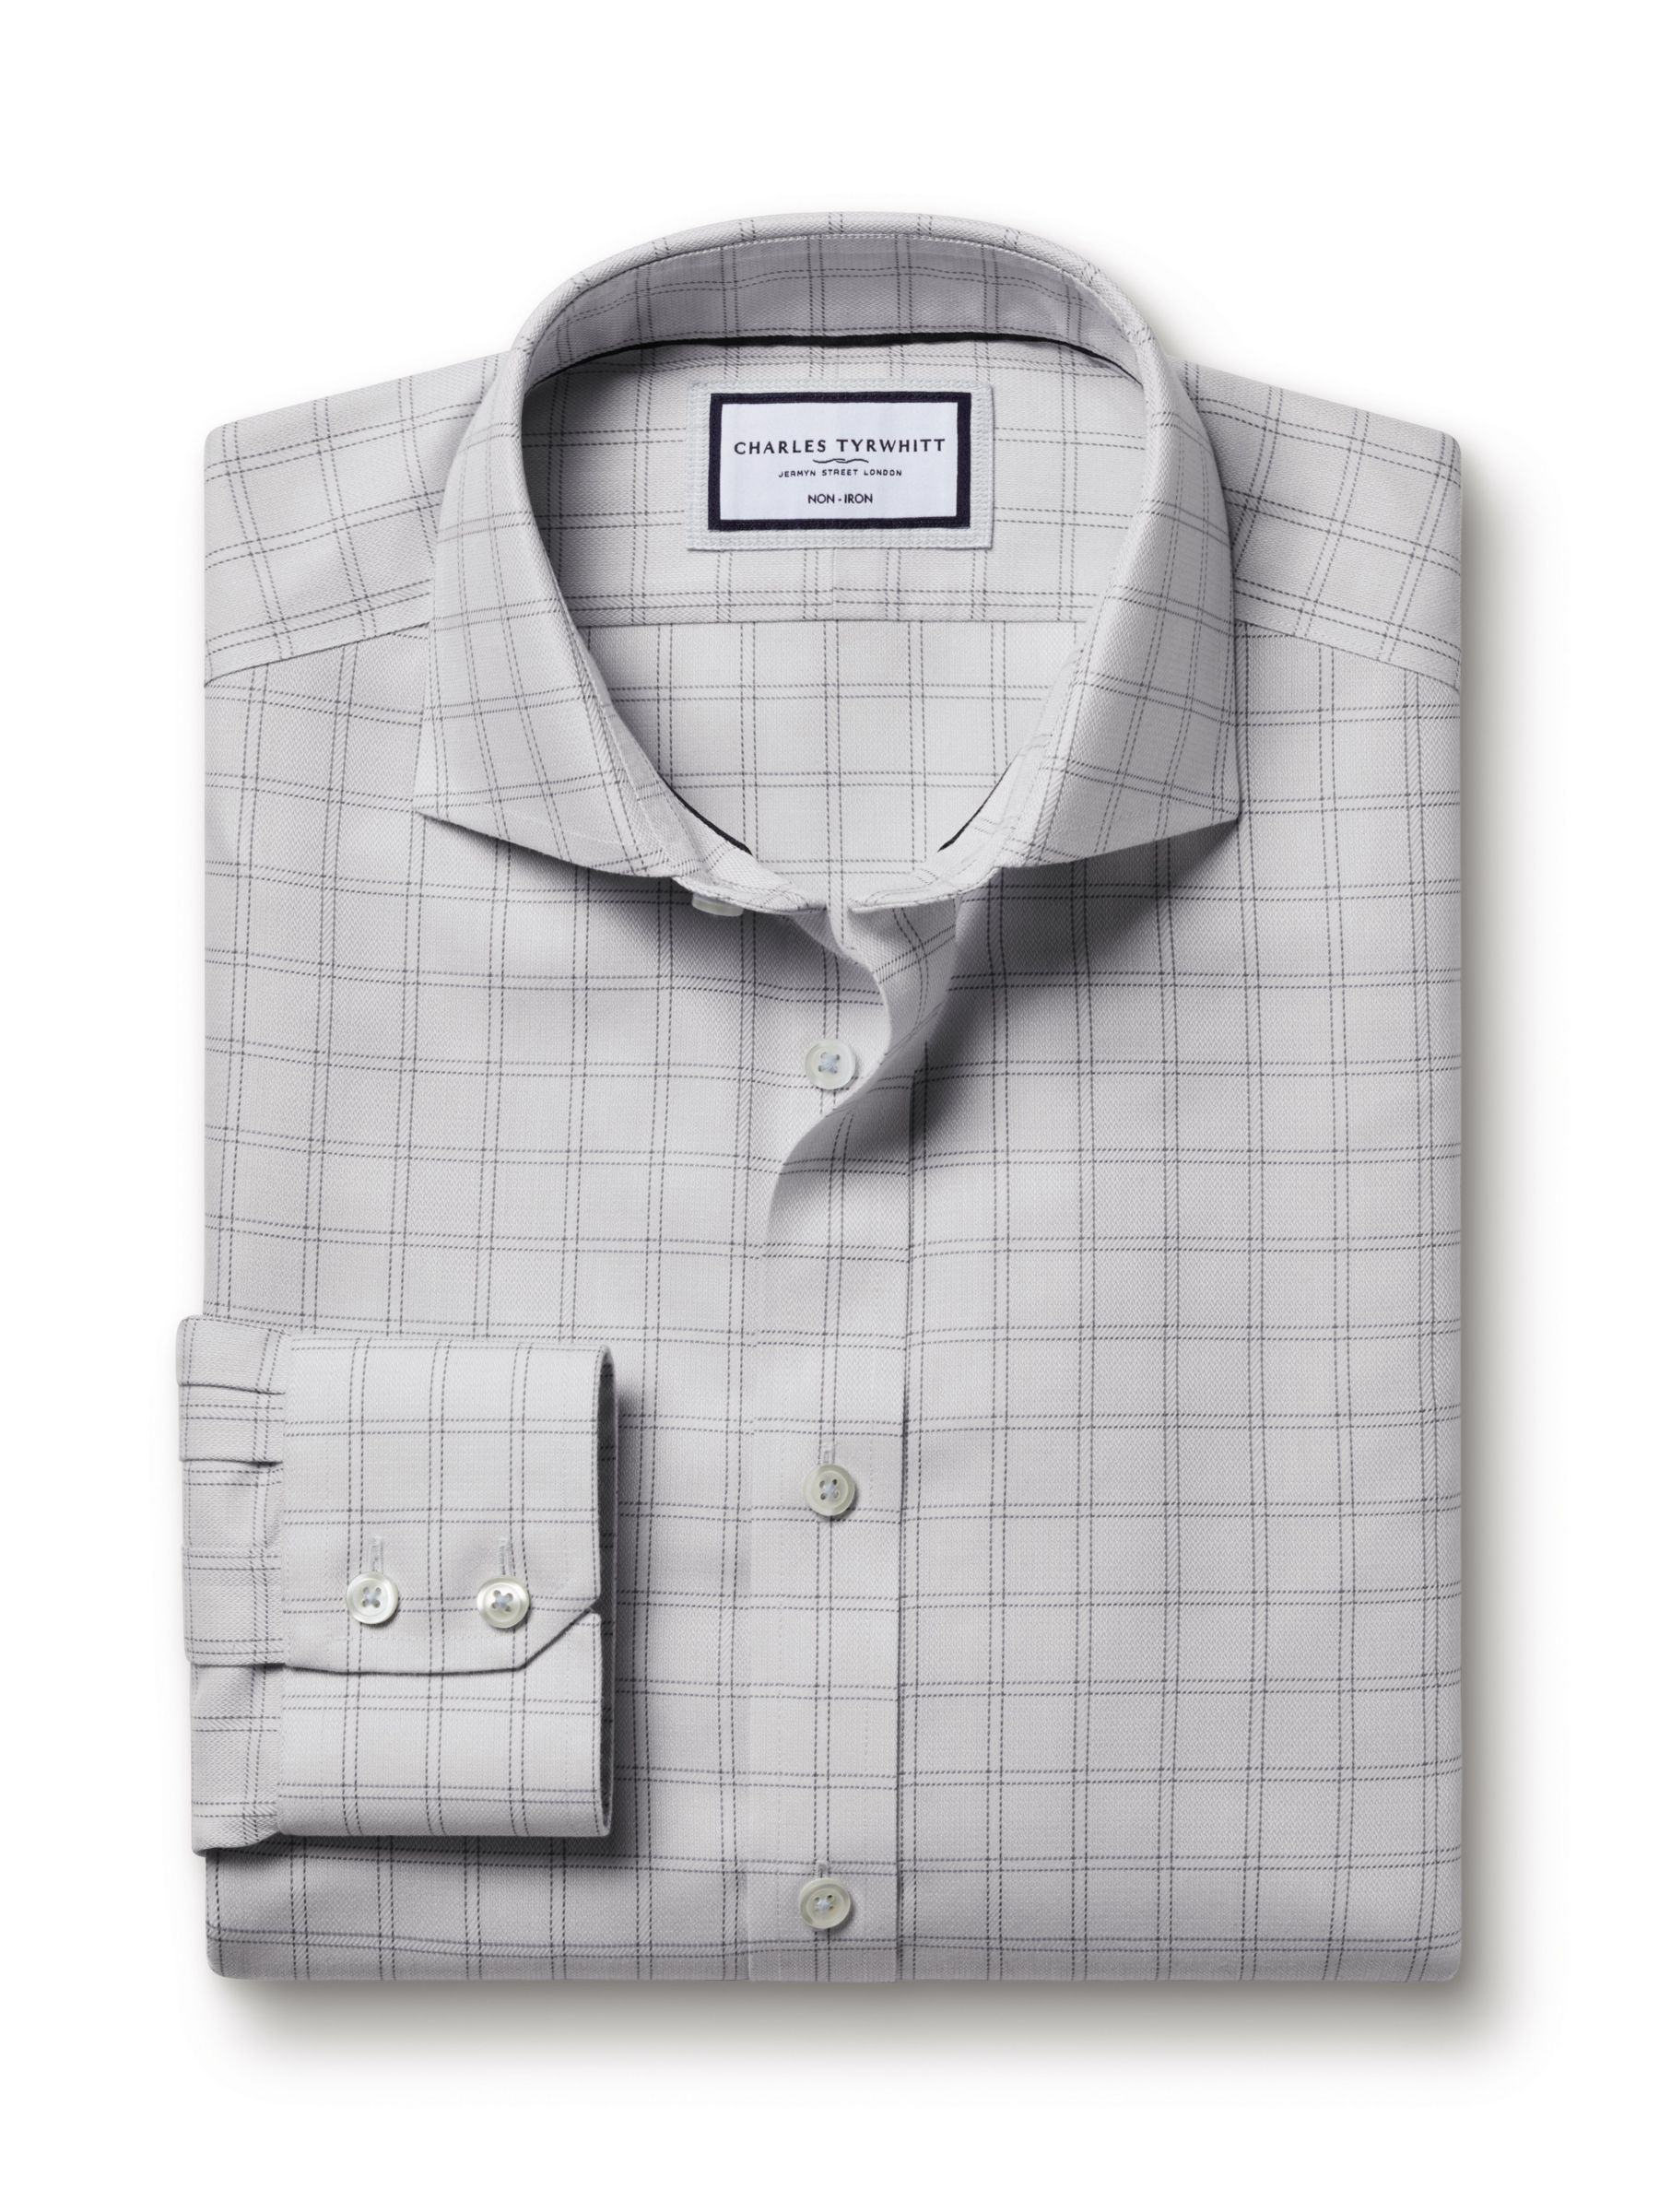 Charles Tyrwhitt Non-Iron Mayfair Weave Checked Shirt, Silver Grey, 17.5